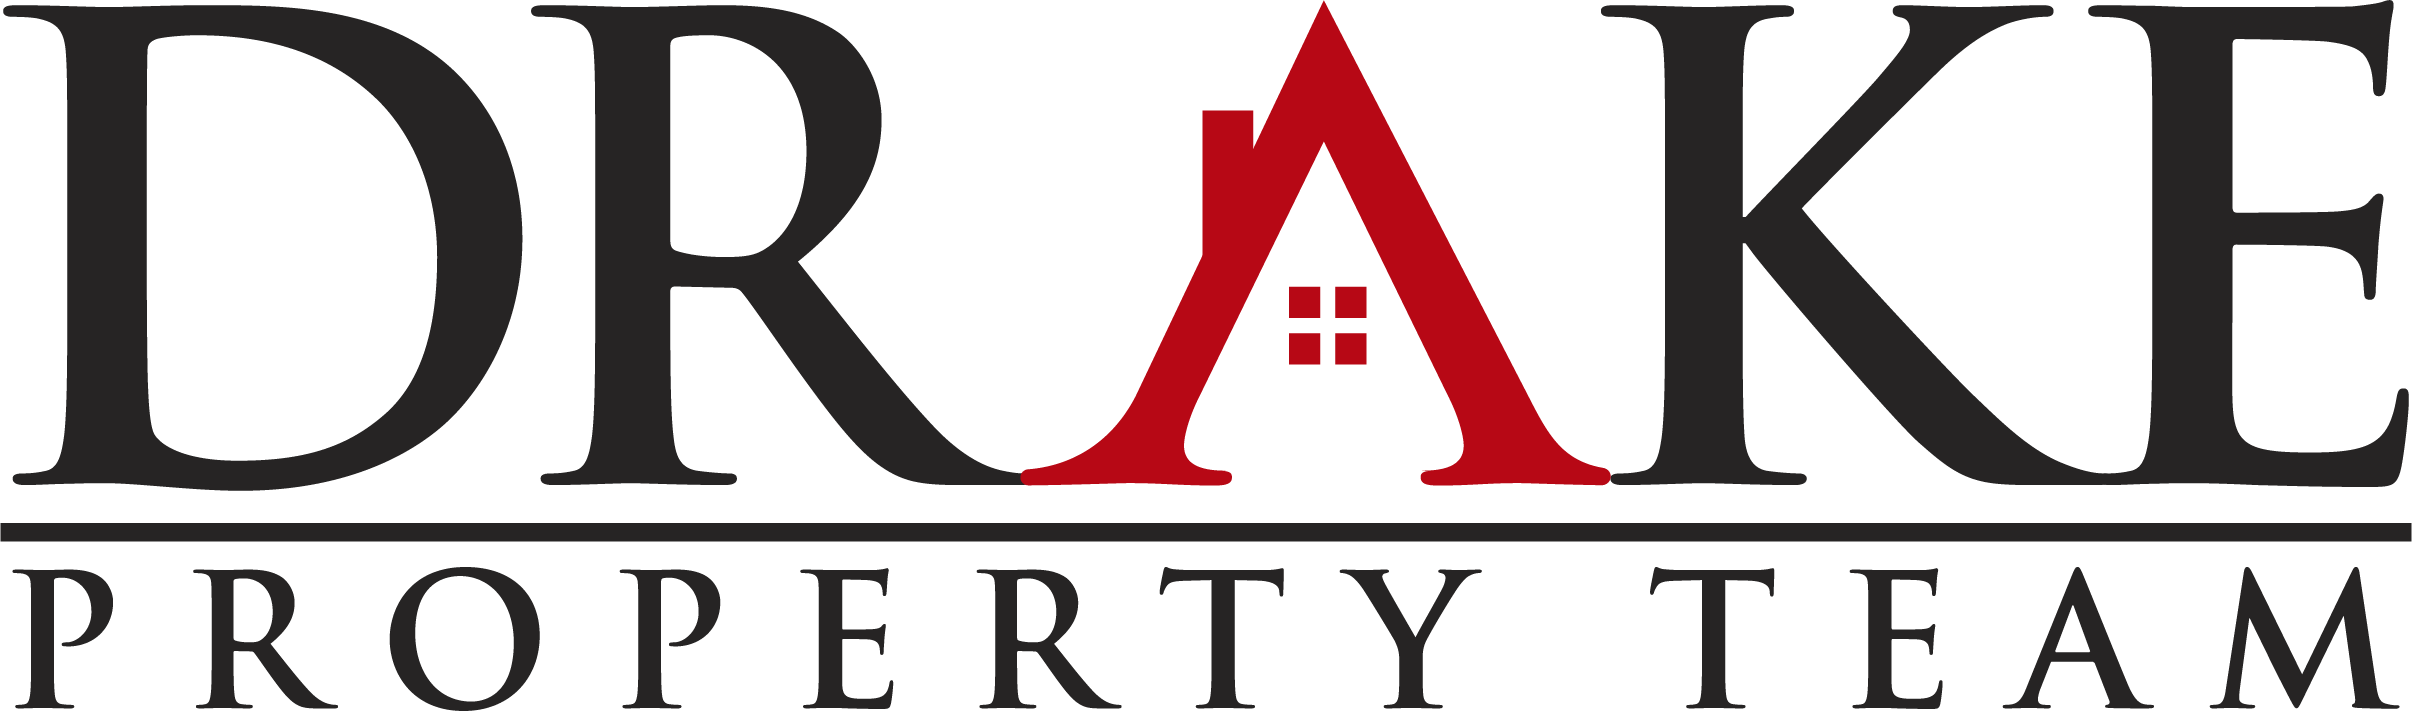 Drake Property Team - Real Estate (2412x711), Png Download